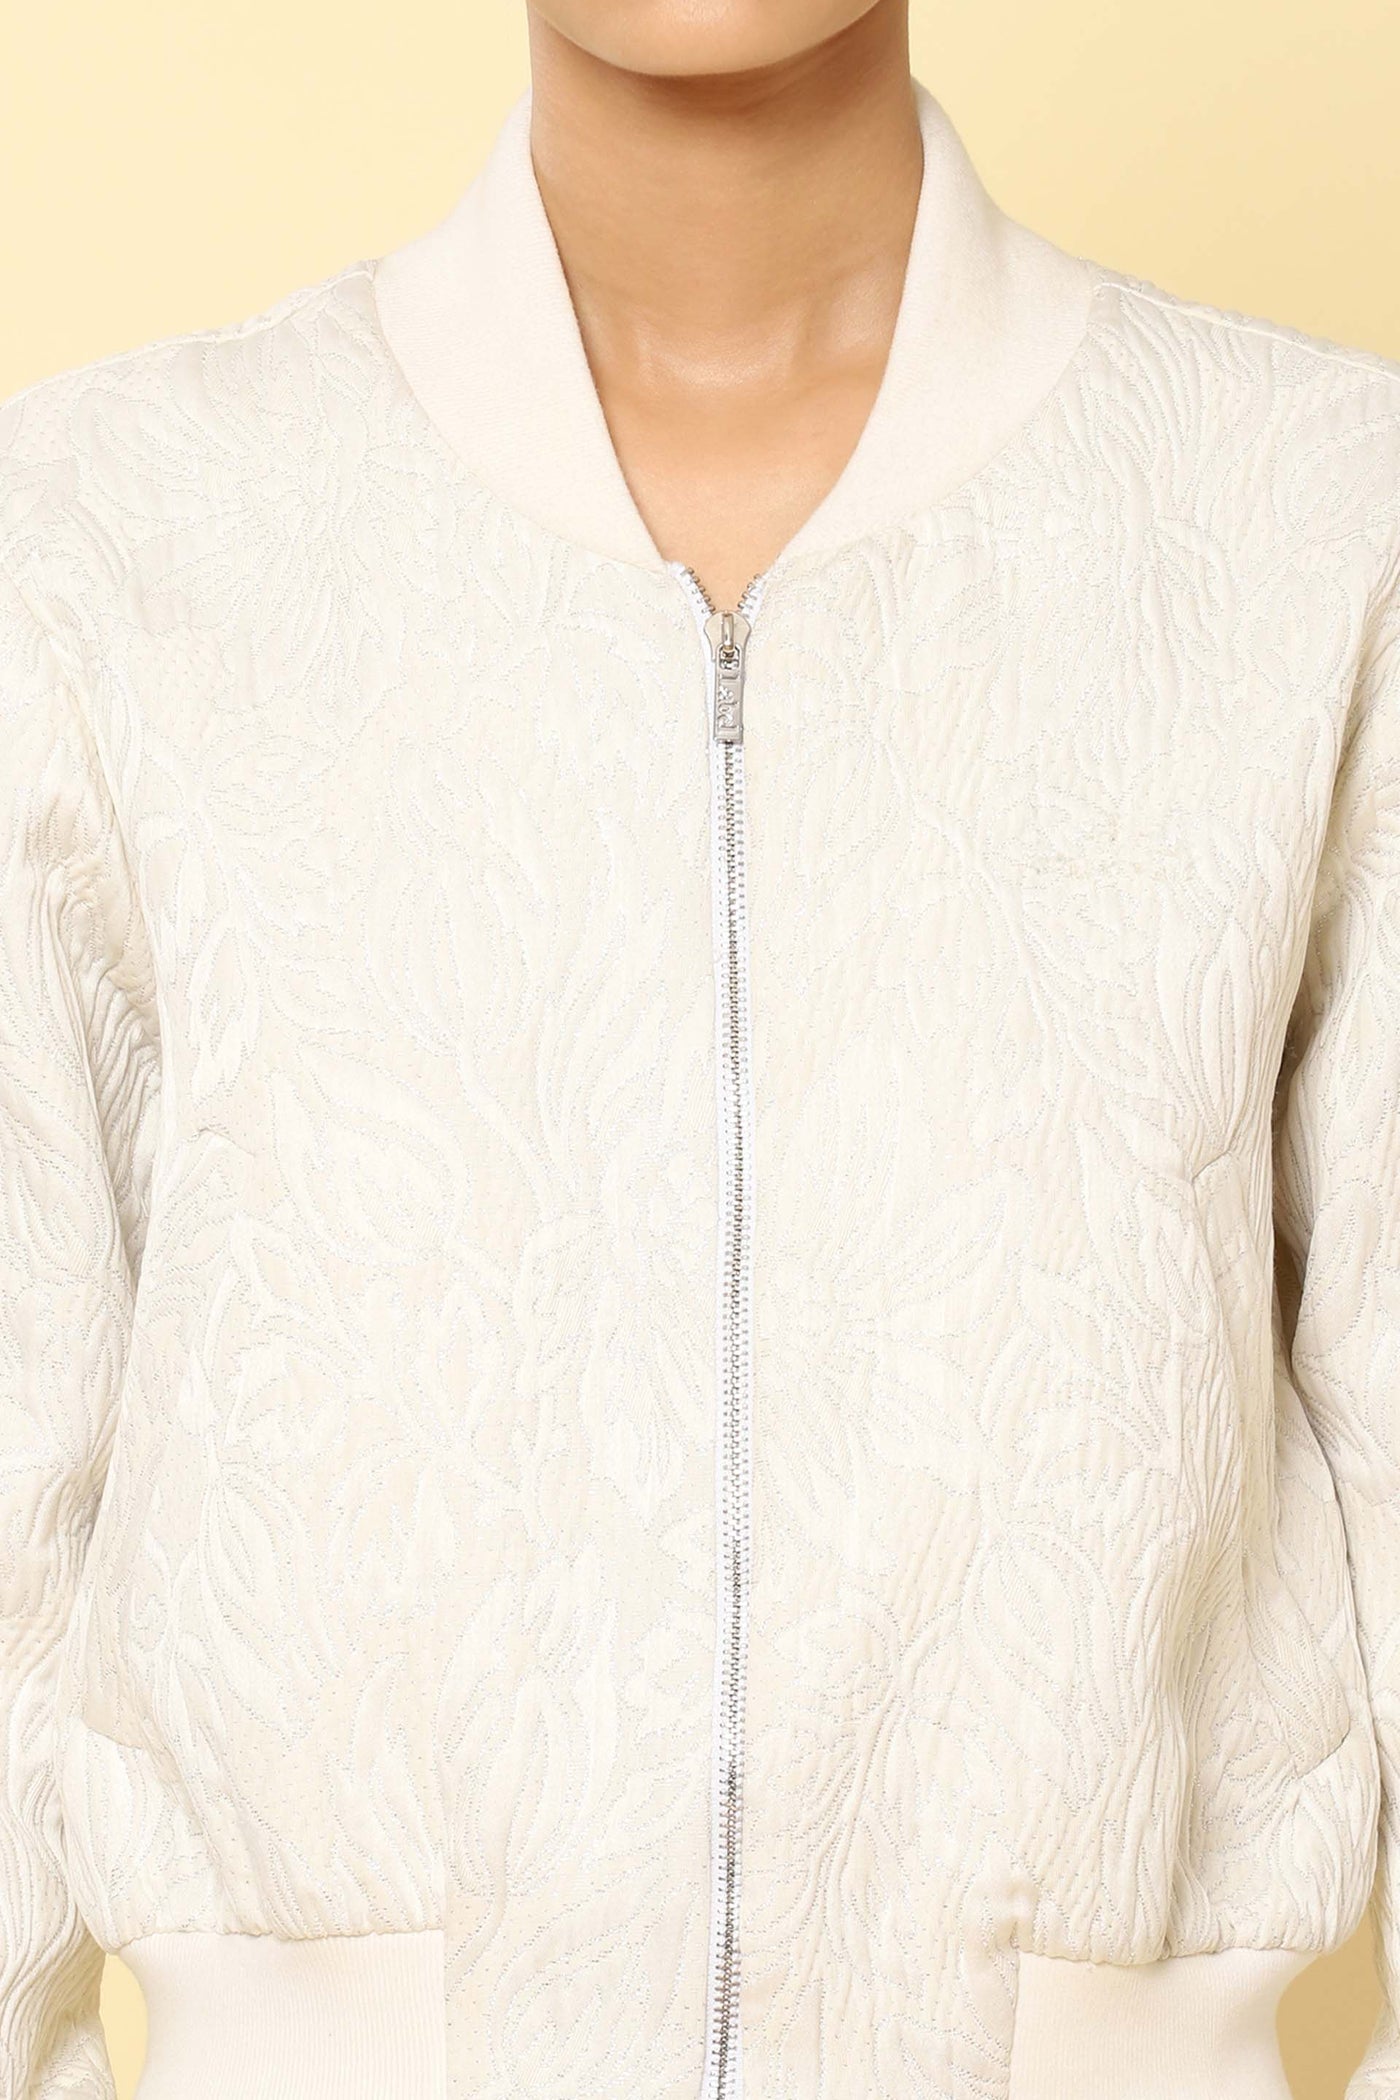 label ritu kumar Off White Jacquard Jacket western indian designer wear online shopping melange singapore